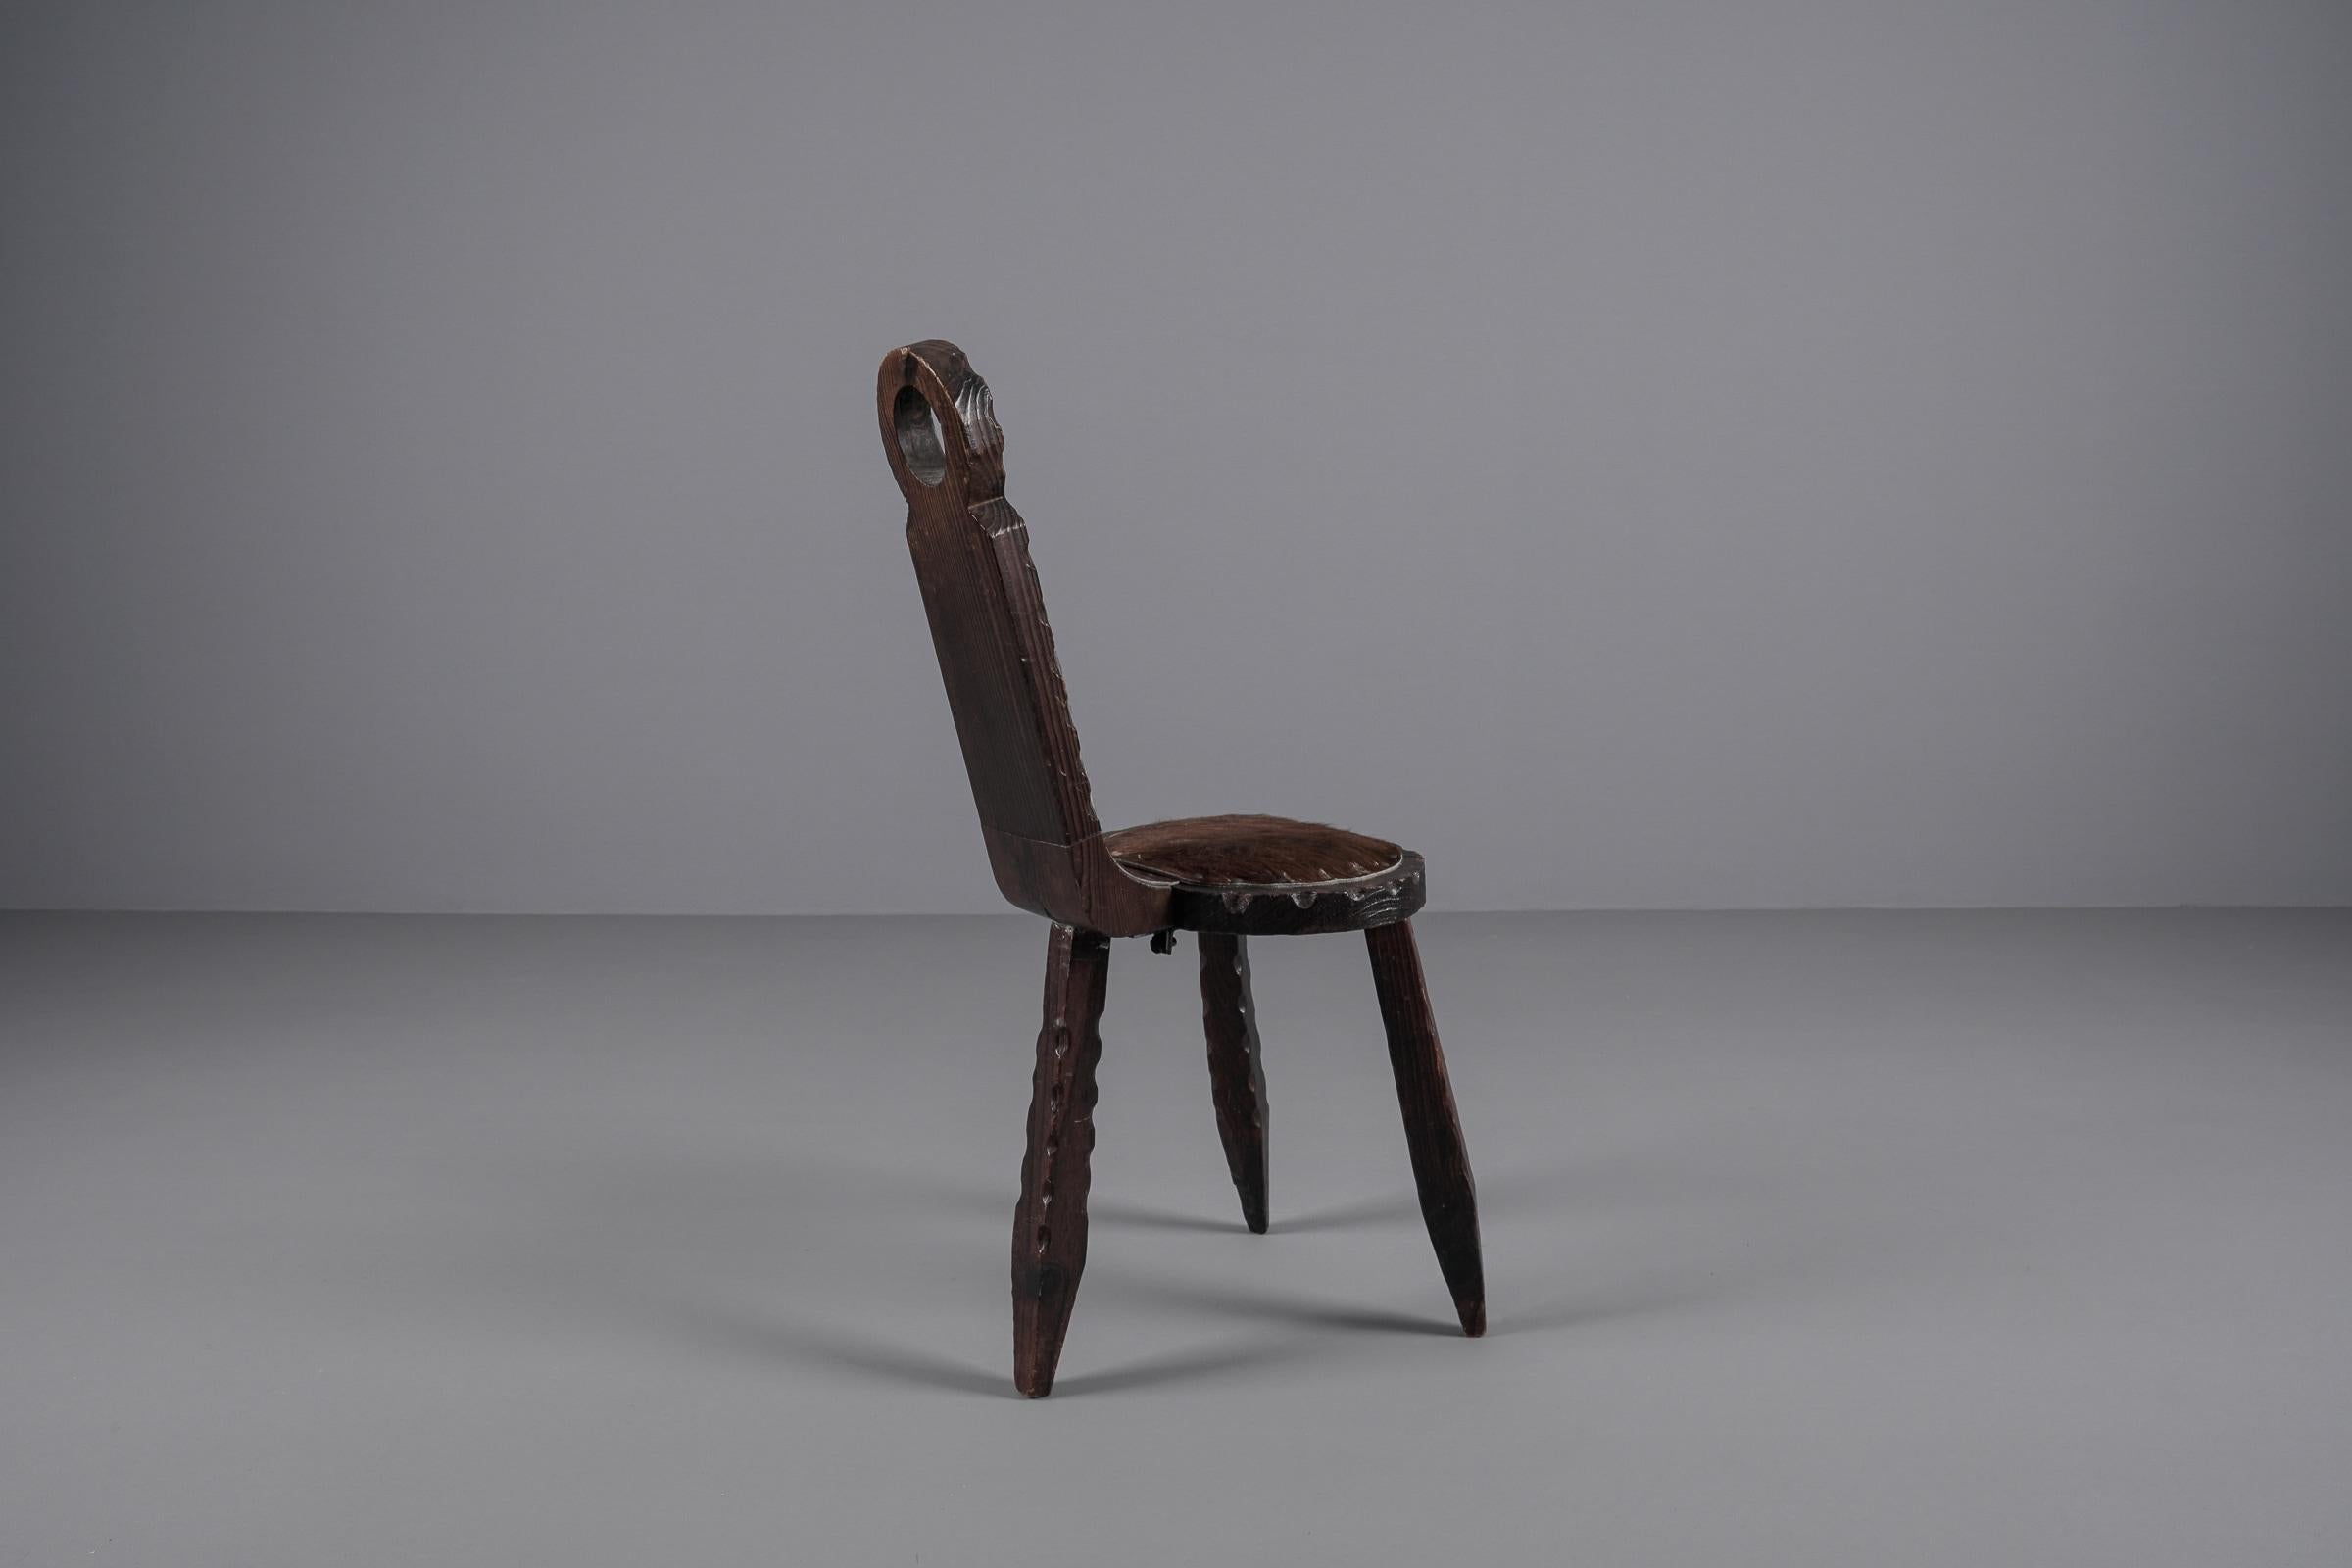 Cowhide 3-Legged Brutalist Rustic Modern Sculptured Chair, 1960s France For Sale